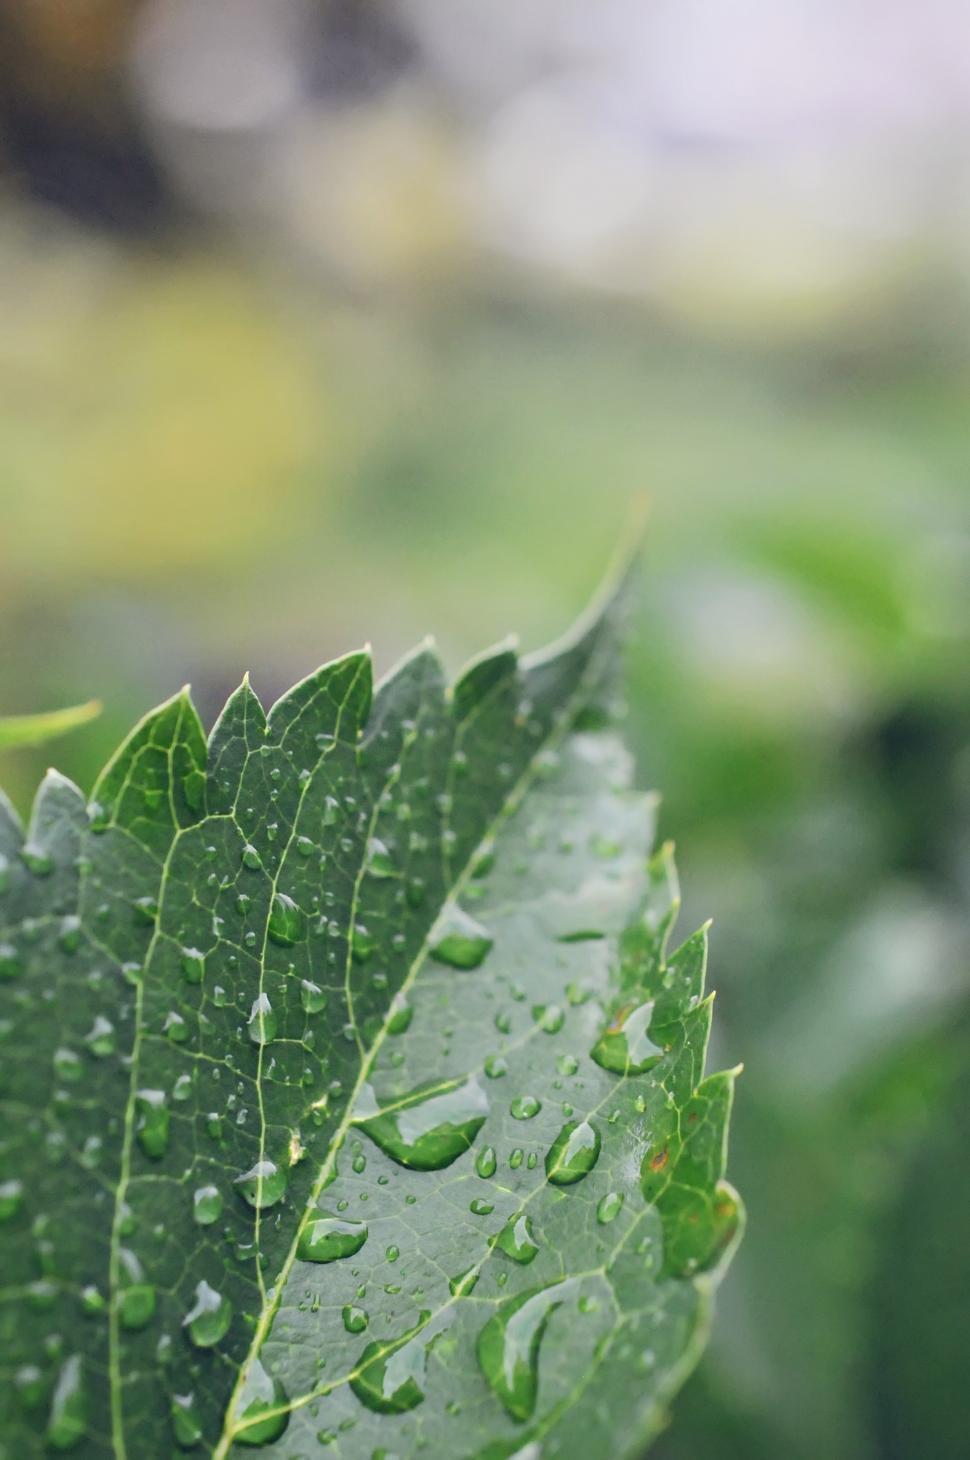 Free Image of Wet Leaf 